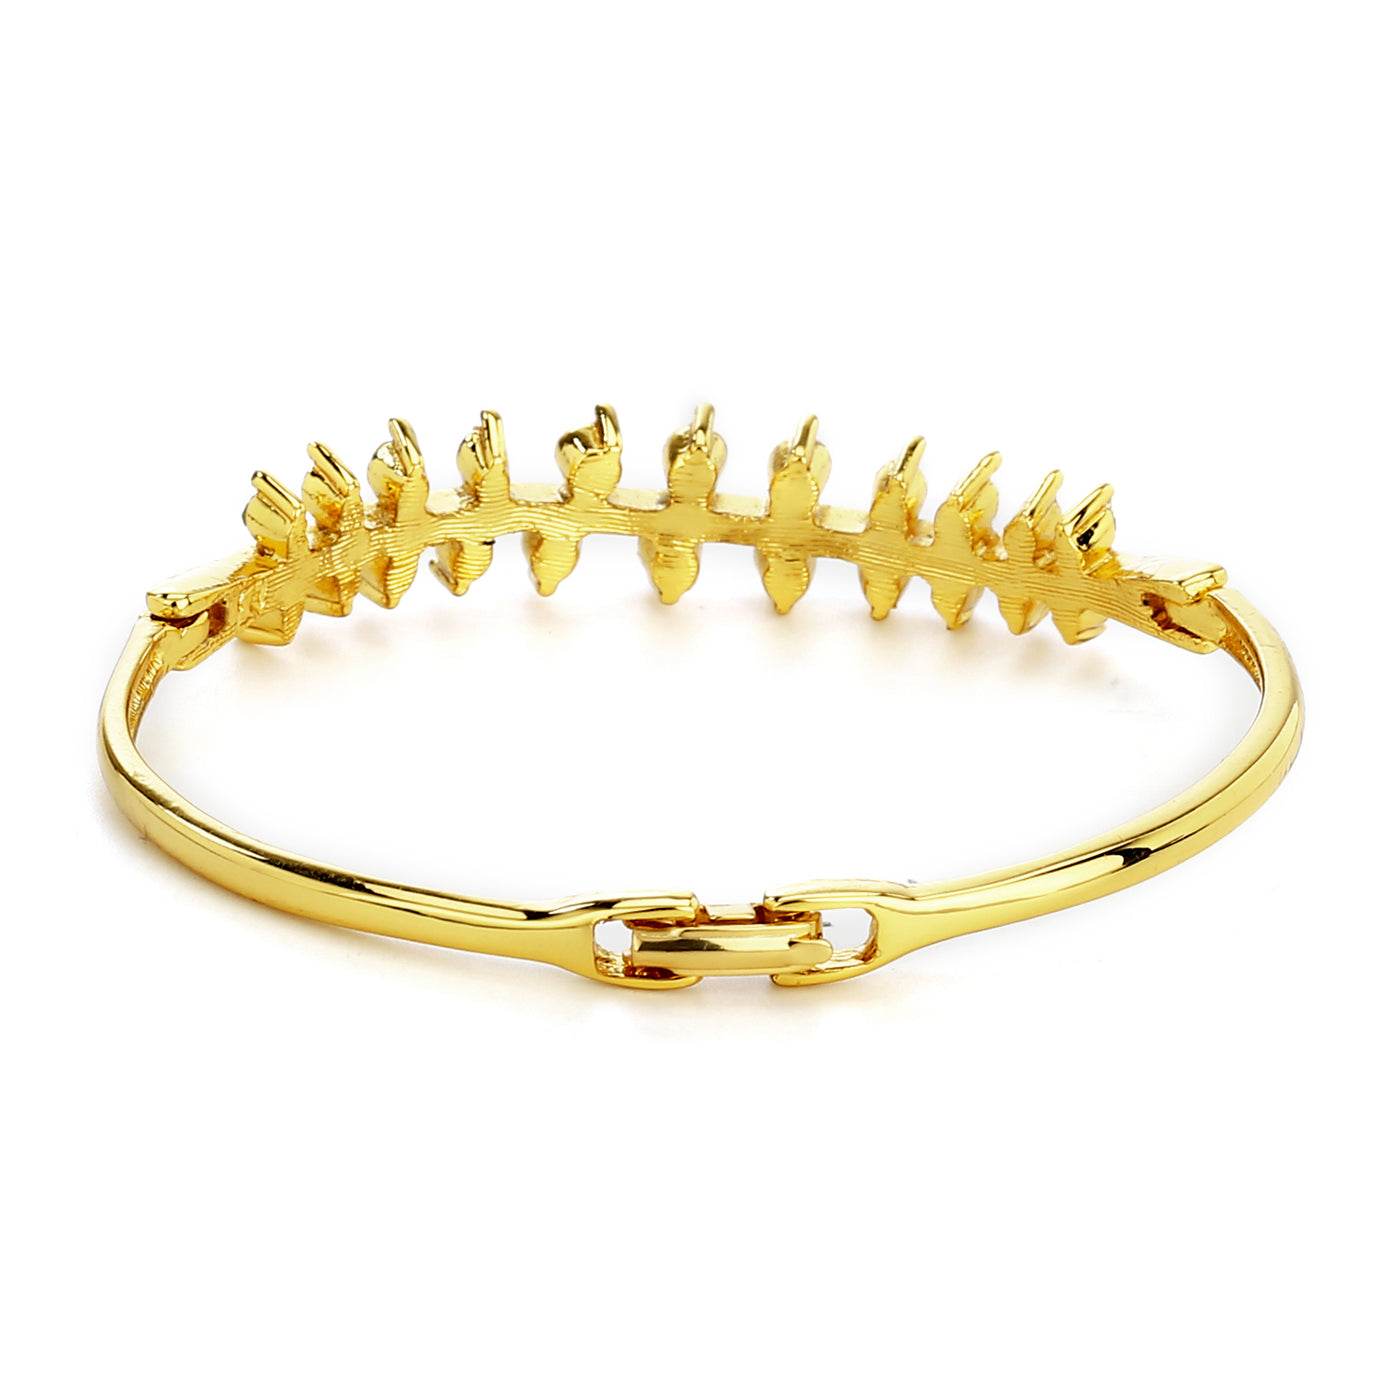 Gold Plated AD Studded Bracelet